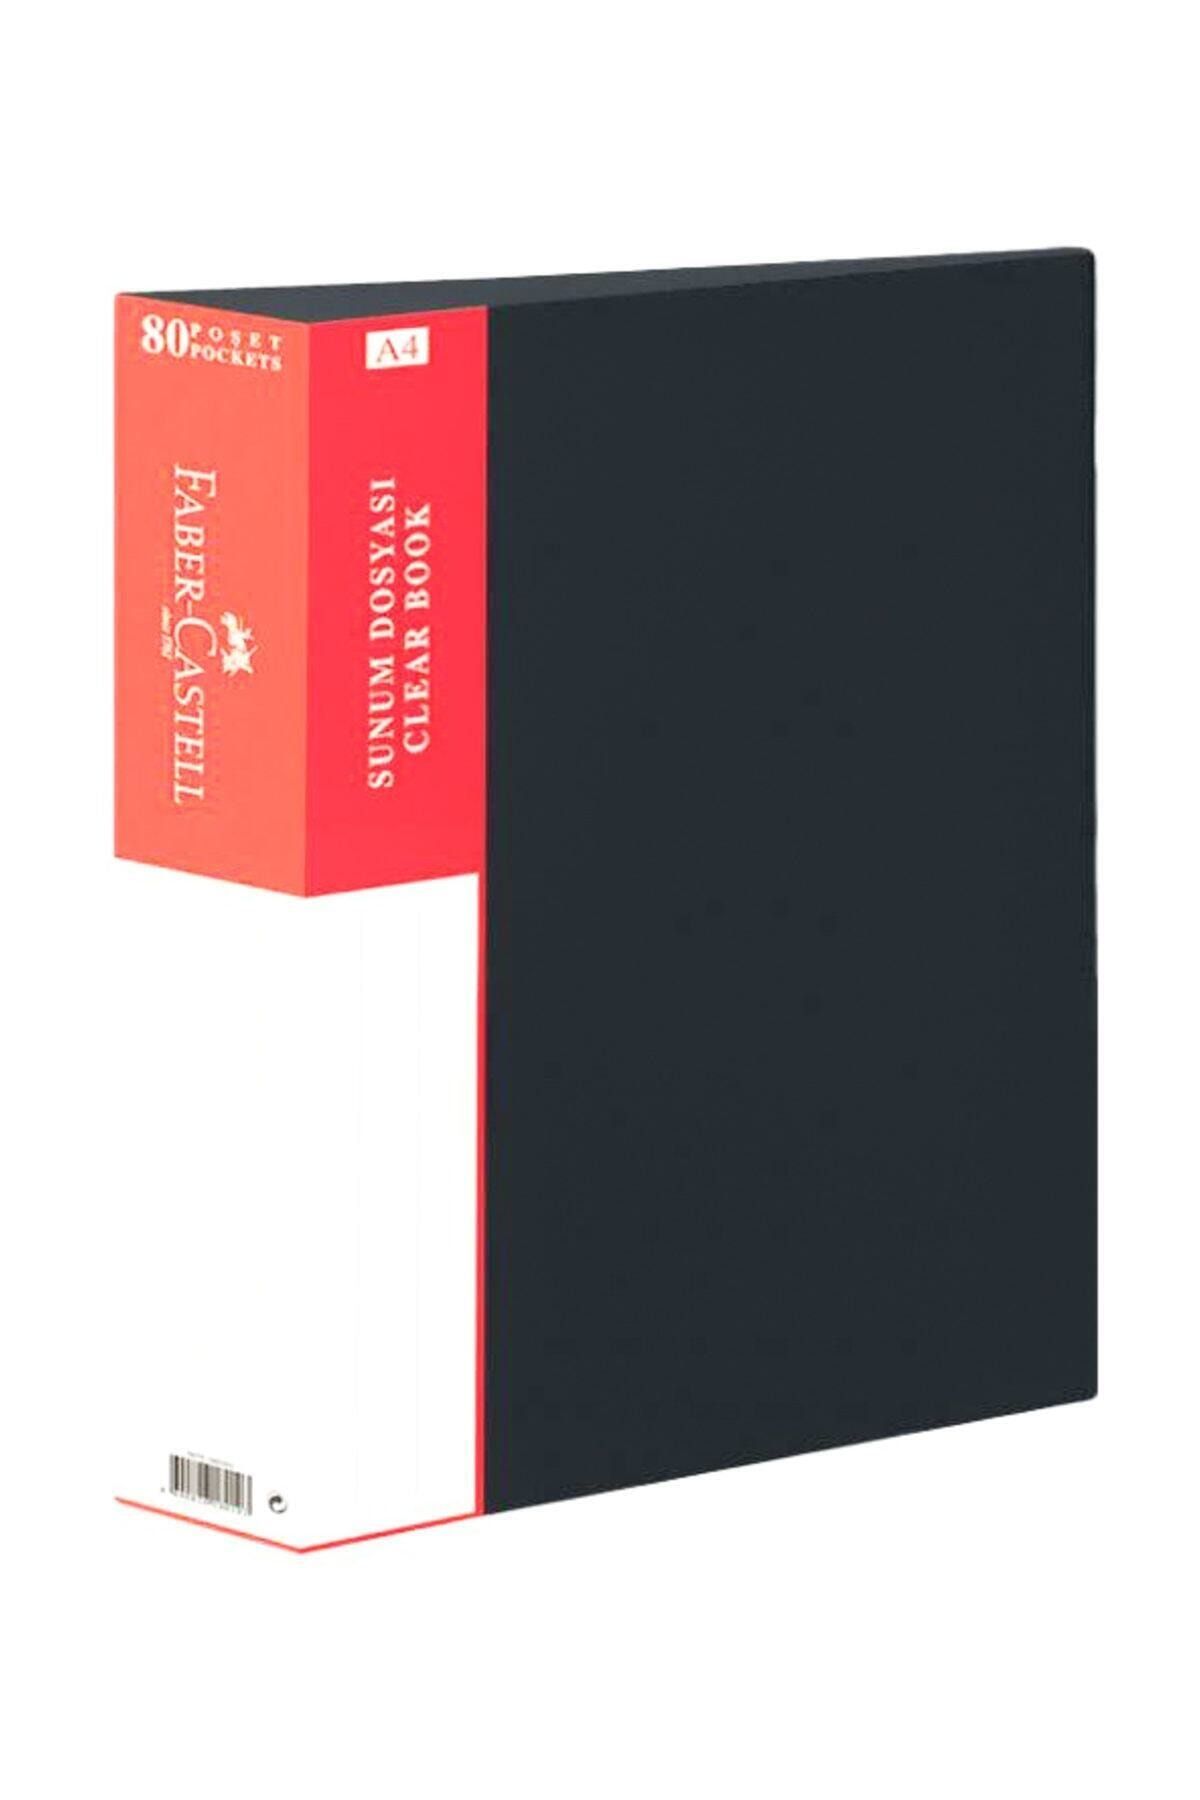 Faber Castell Faber-castell Katalog Dosya 80 Li Siyah-kırmızı